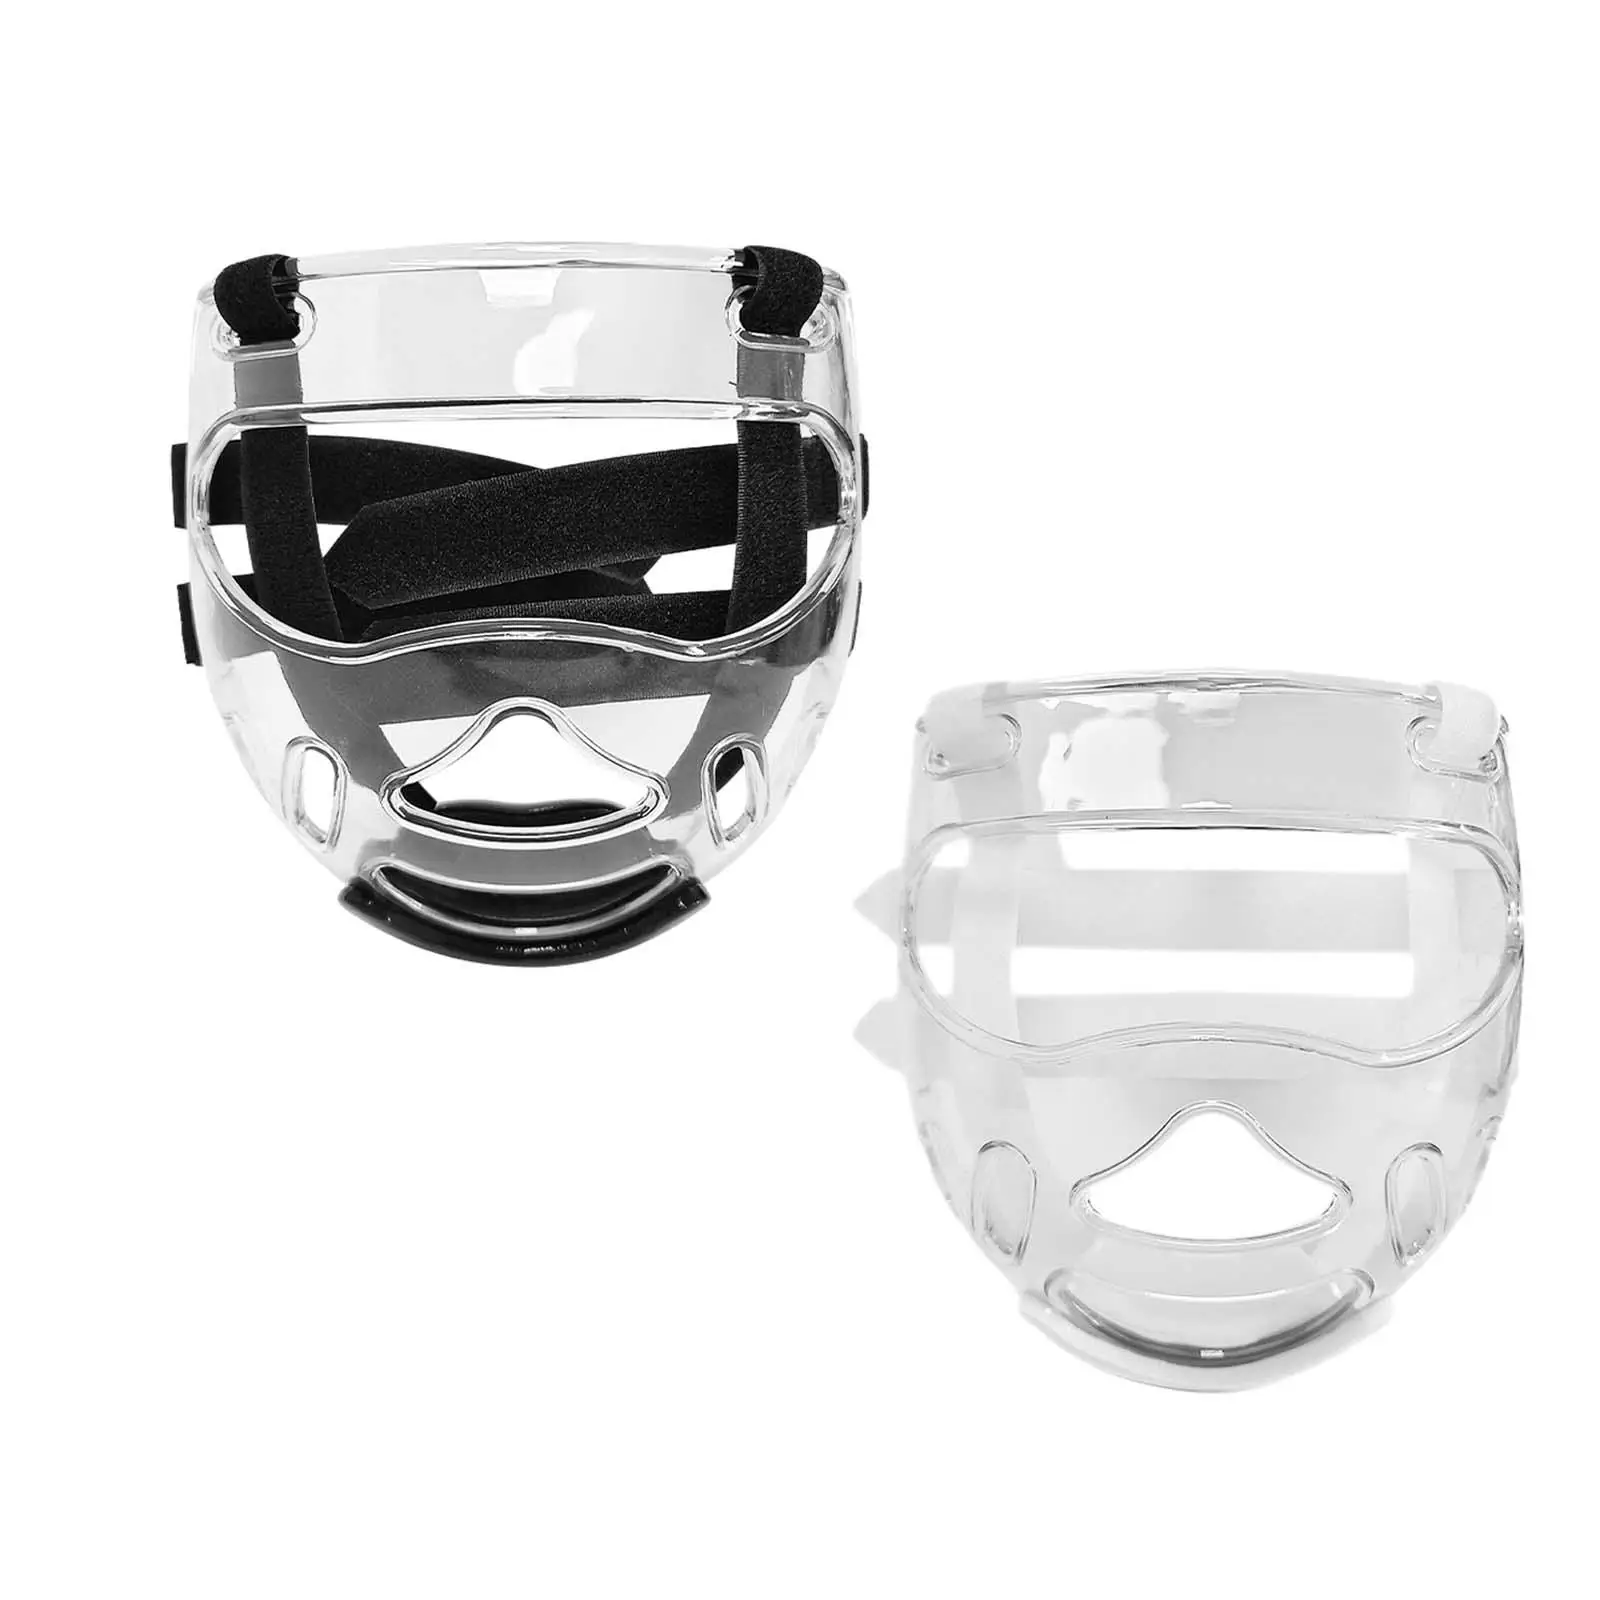 Taekwondo Face Mask Taekwondo Face Shield Boxing Headgear Mask Sparring Mask for Sparring Fighting Muay Thai Wrestling Sports